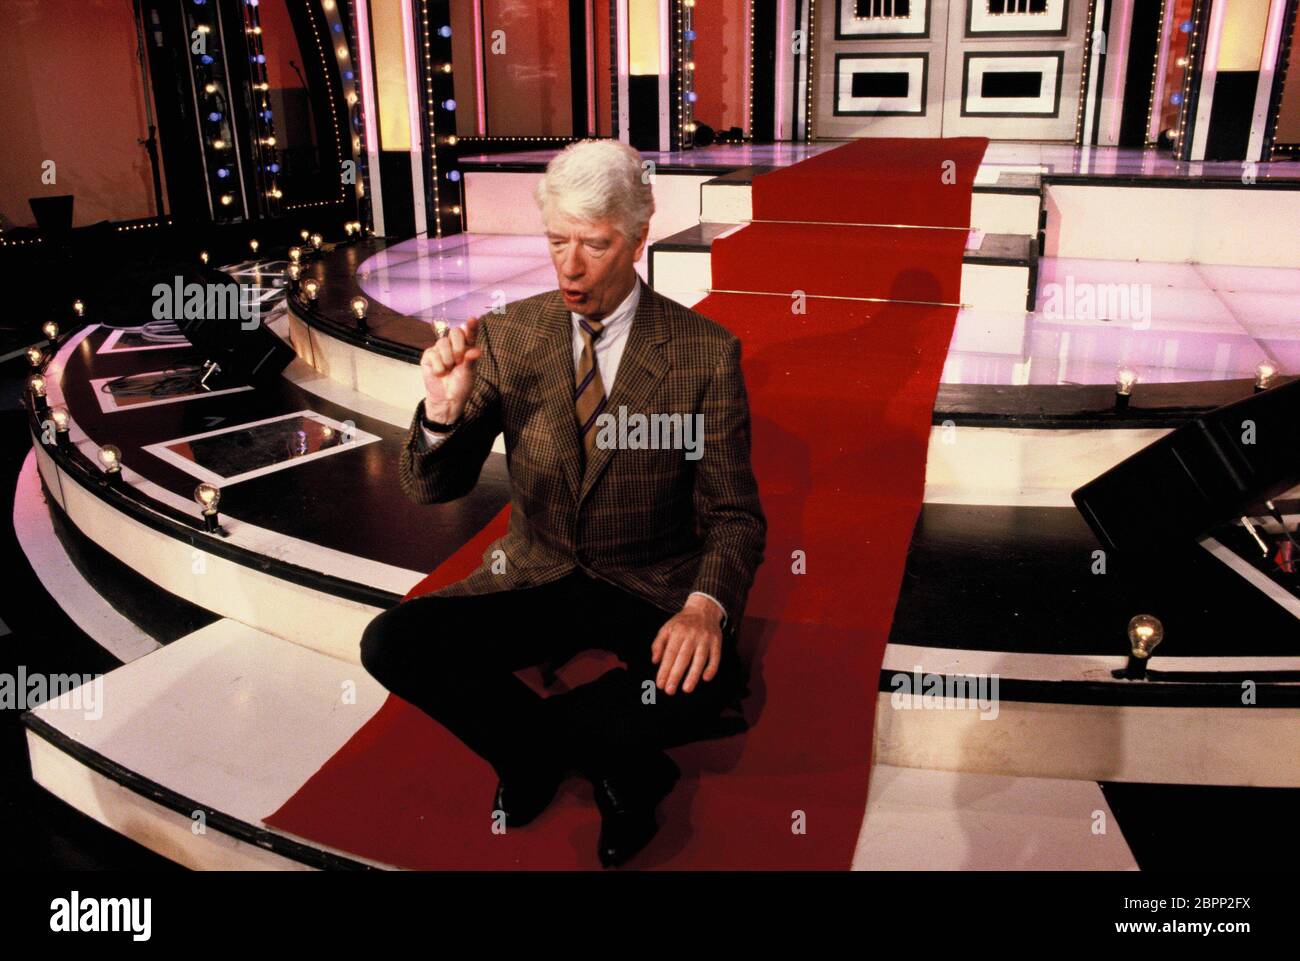 'Die verflixte 7' TV-Spielshow mit Rudi Carrell 1986 - Moderator Rudi Carrell Stock Photo